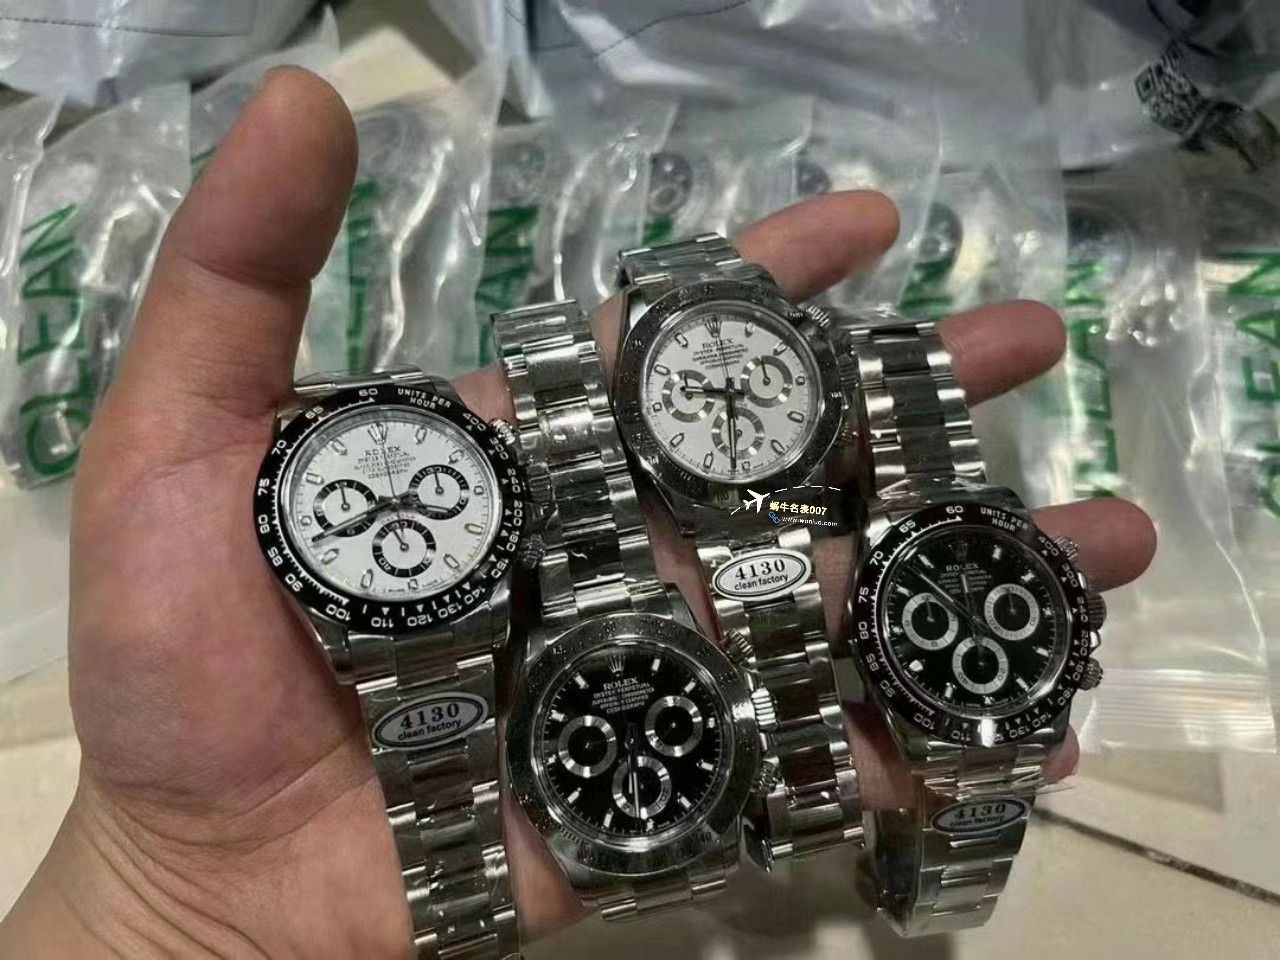 Clean/C厂劳力士灰胶迪通拿m126519ln-0006一比一精仿复刻手表 